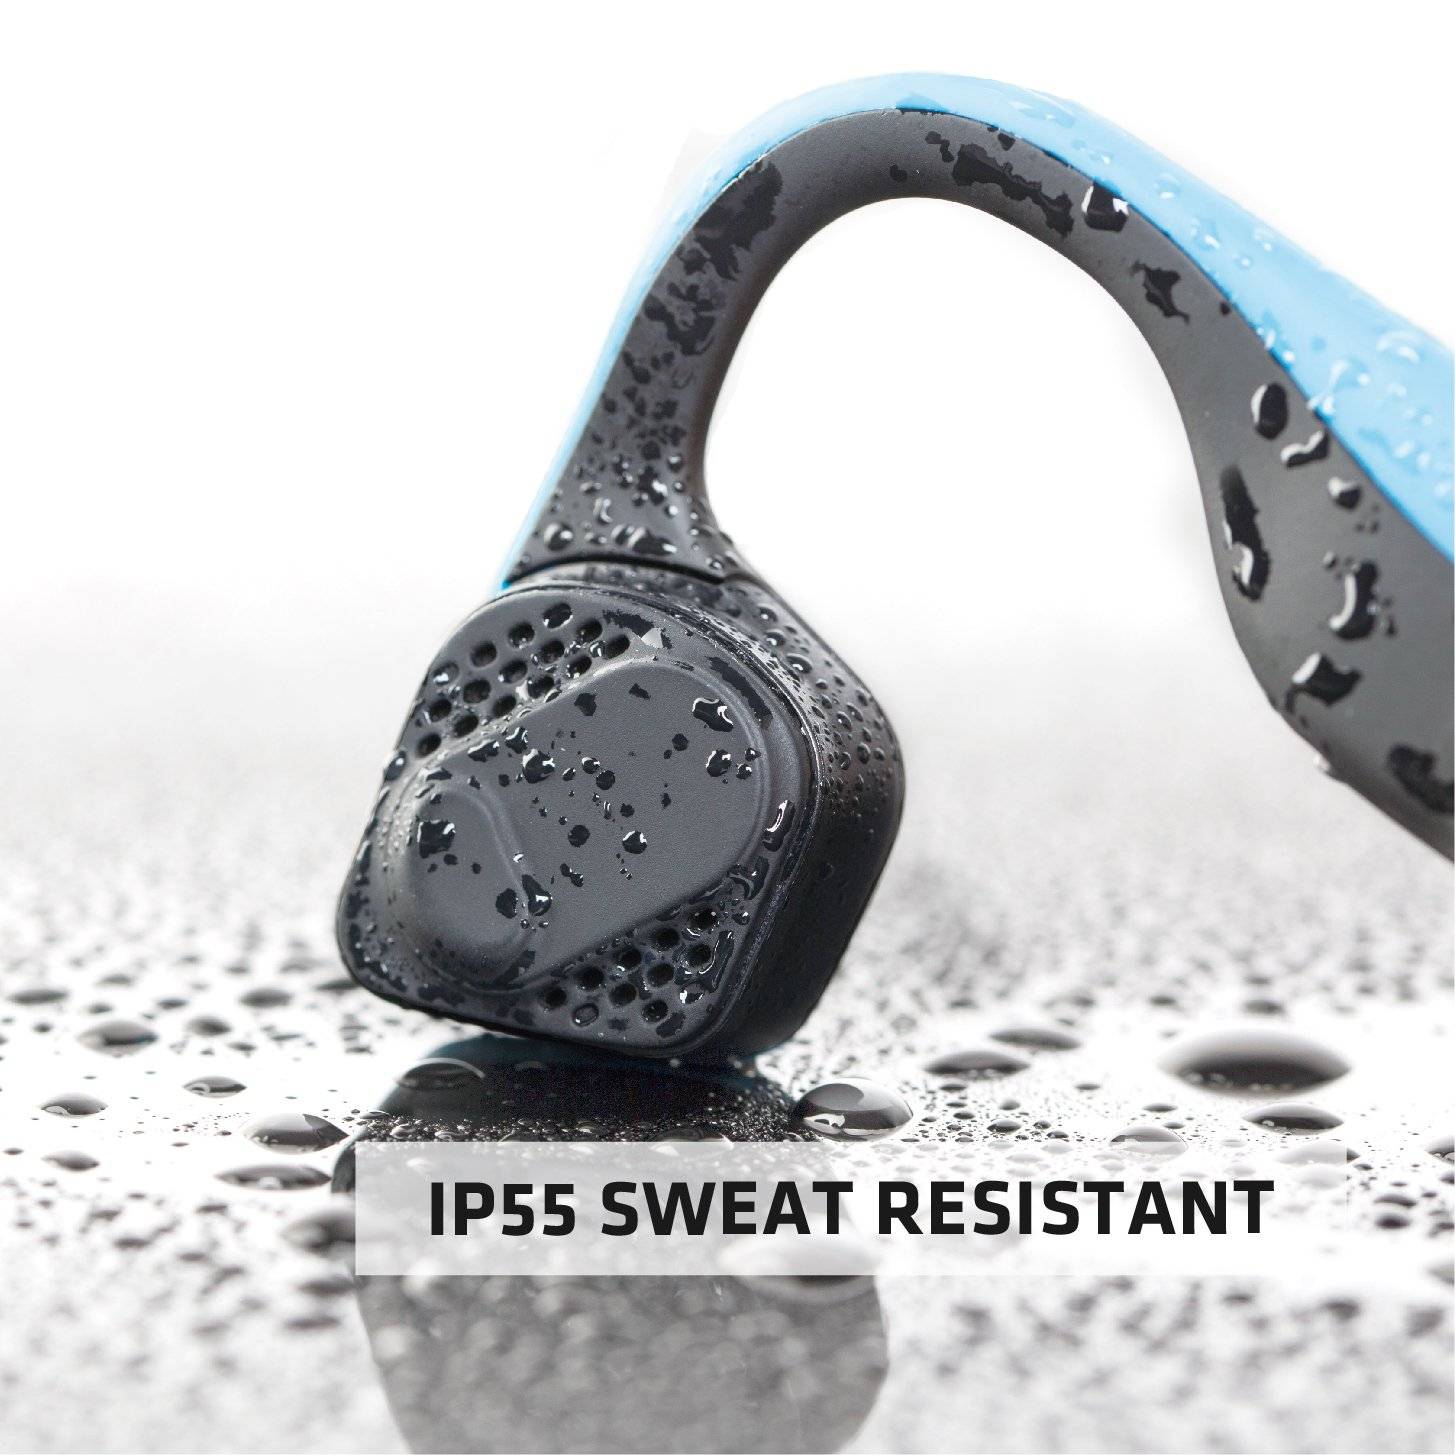 IP55 rated Sweatproof